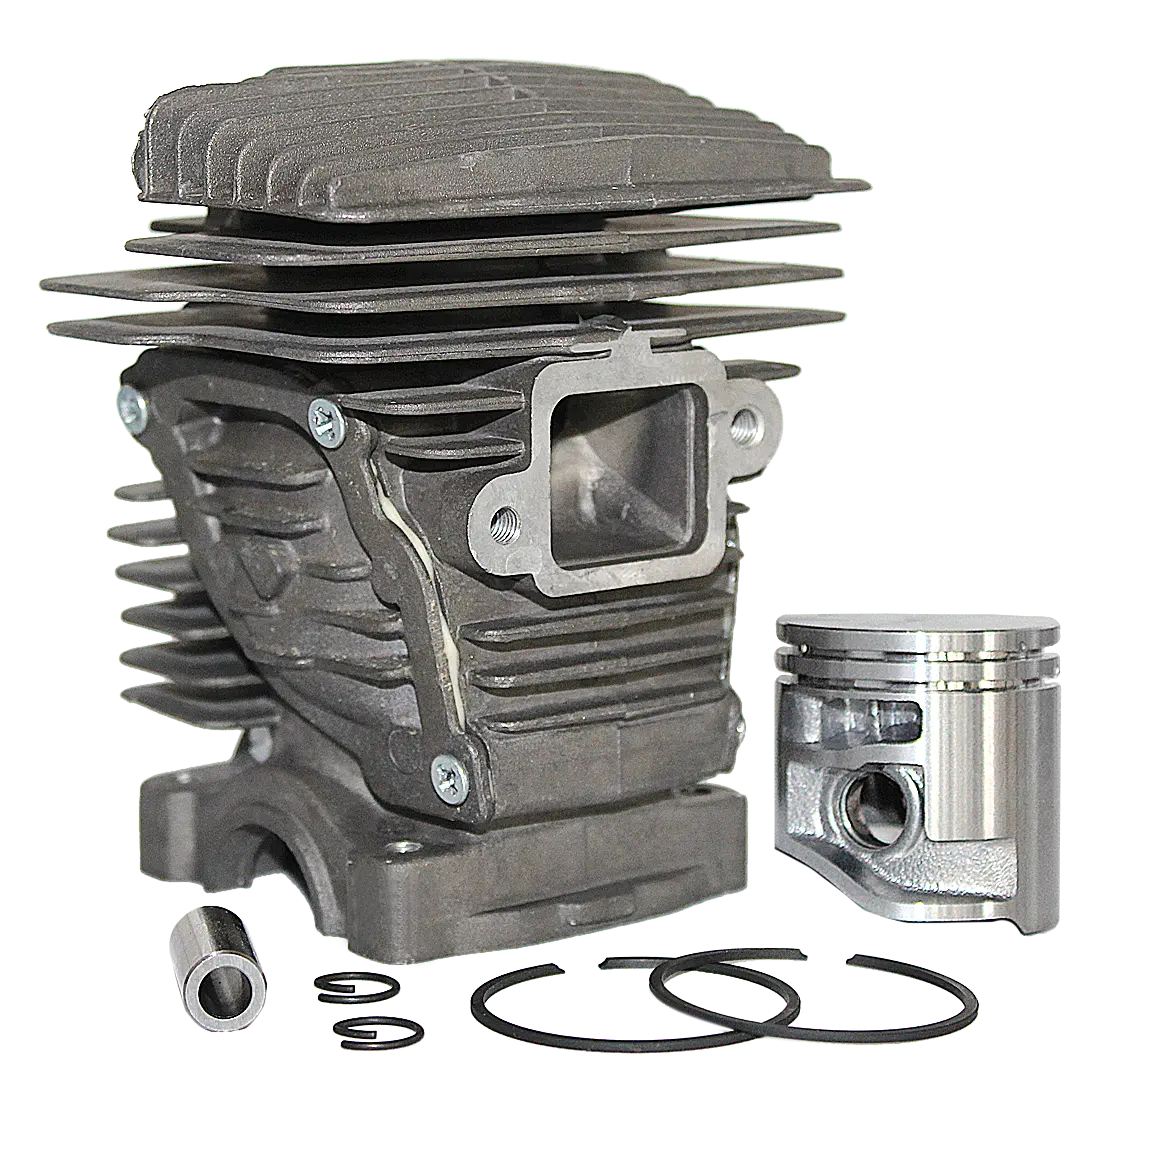 Pistão do cilindro do motor nikasil, 38mm, kit para stihl ms181 ms181c, pequena serra elétrica do motor